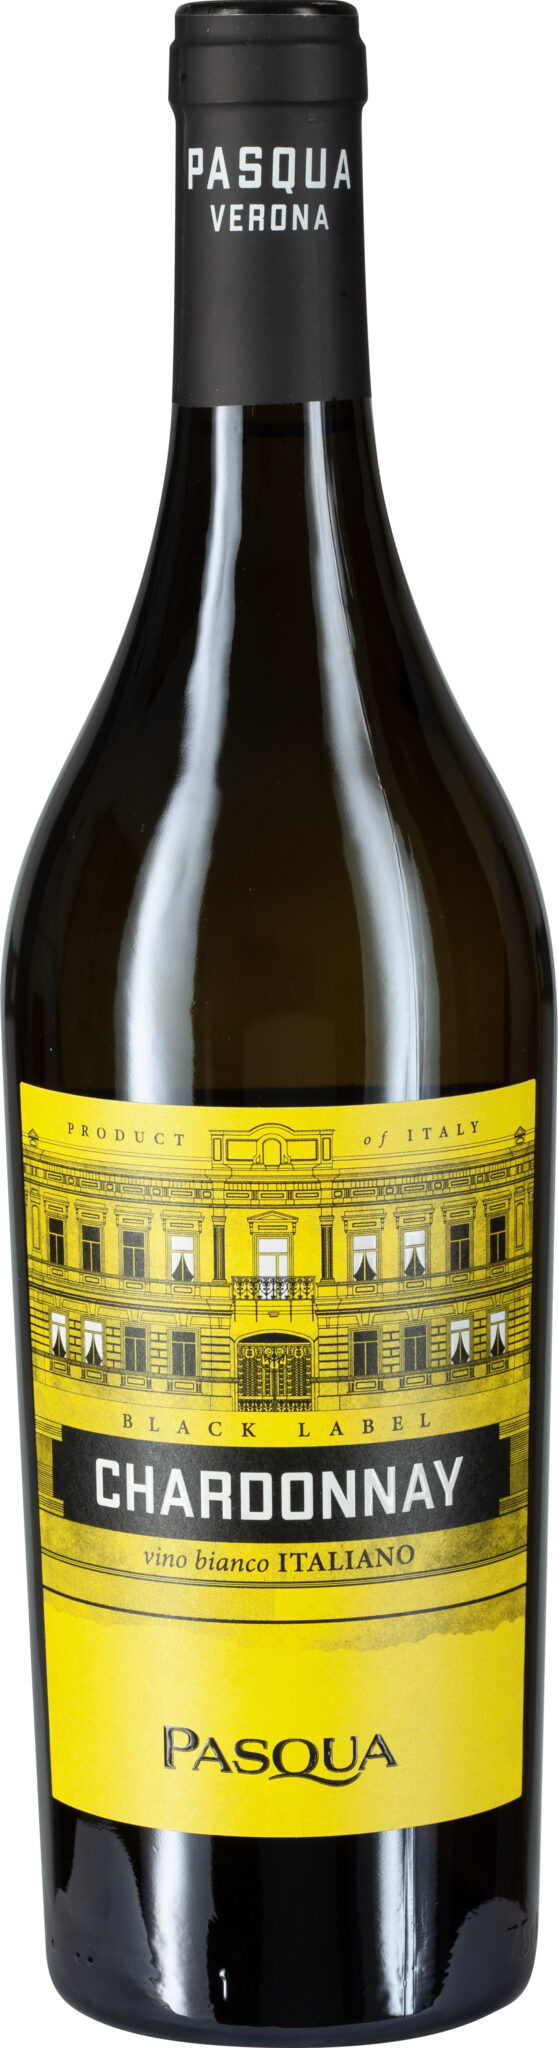 Pasqua Black Label, Chardonnay Vino Bianco Italiano